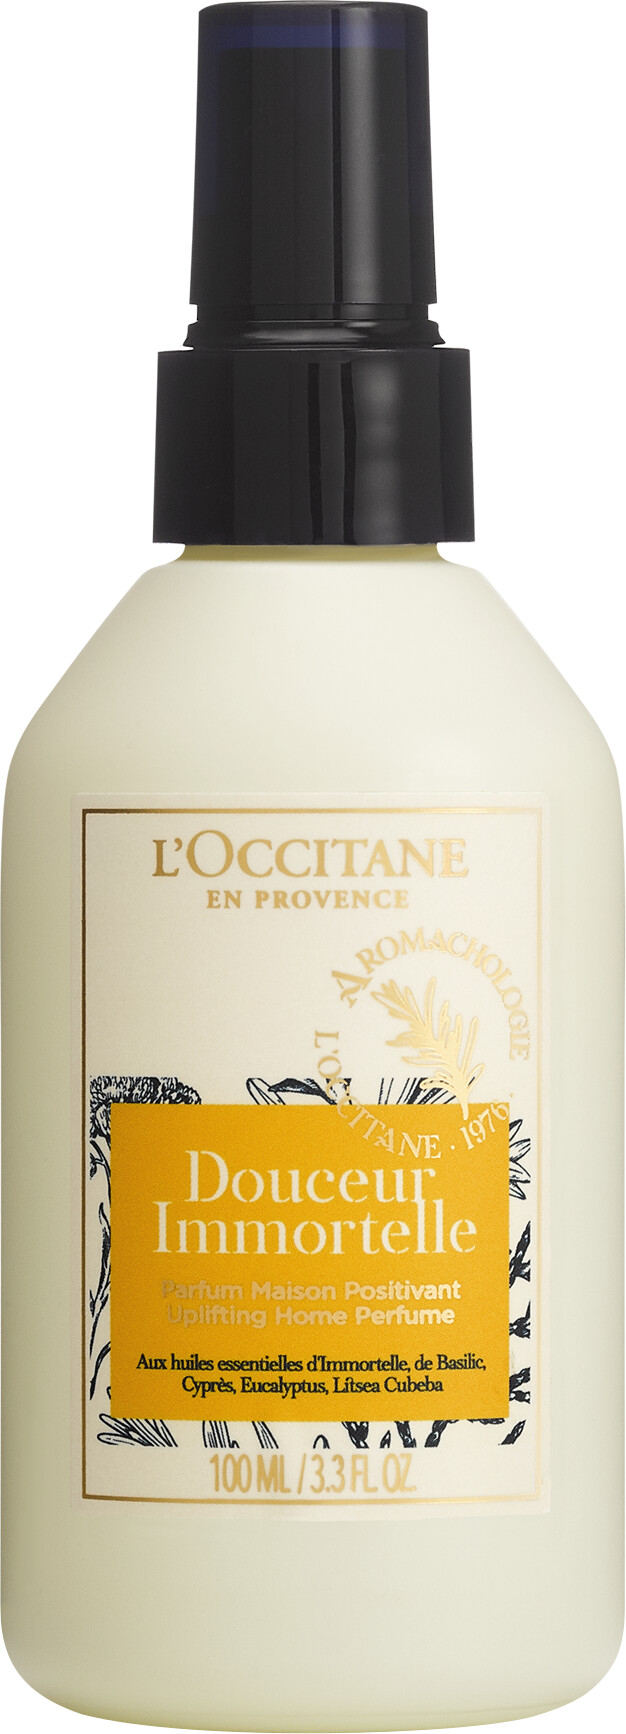 L’Occitane Douceur Immortelle Uplifting Home Perfume